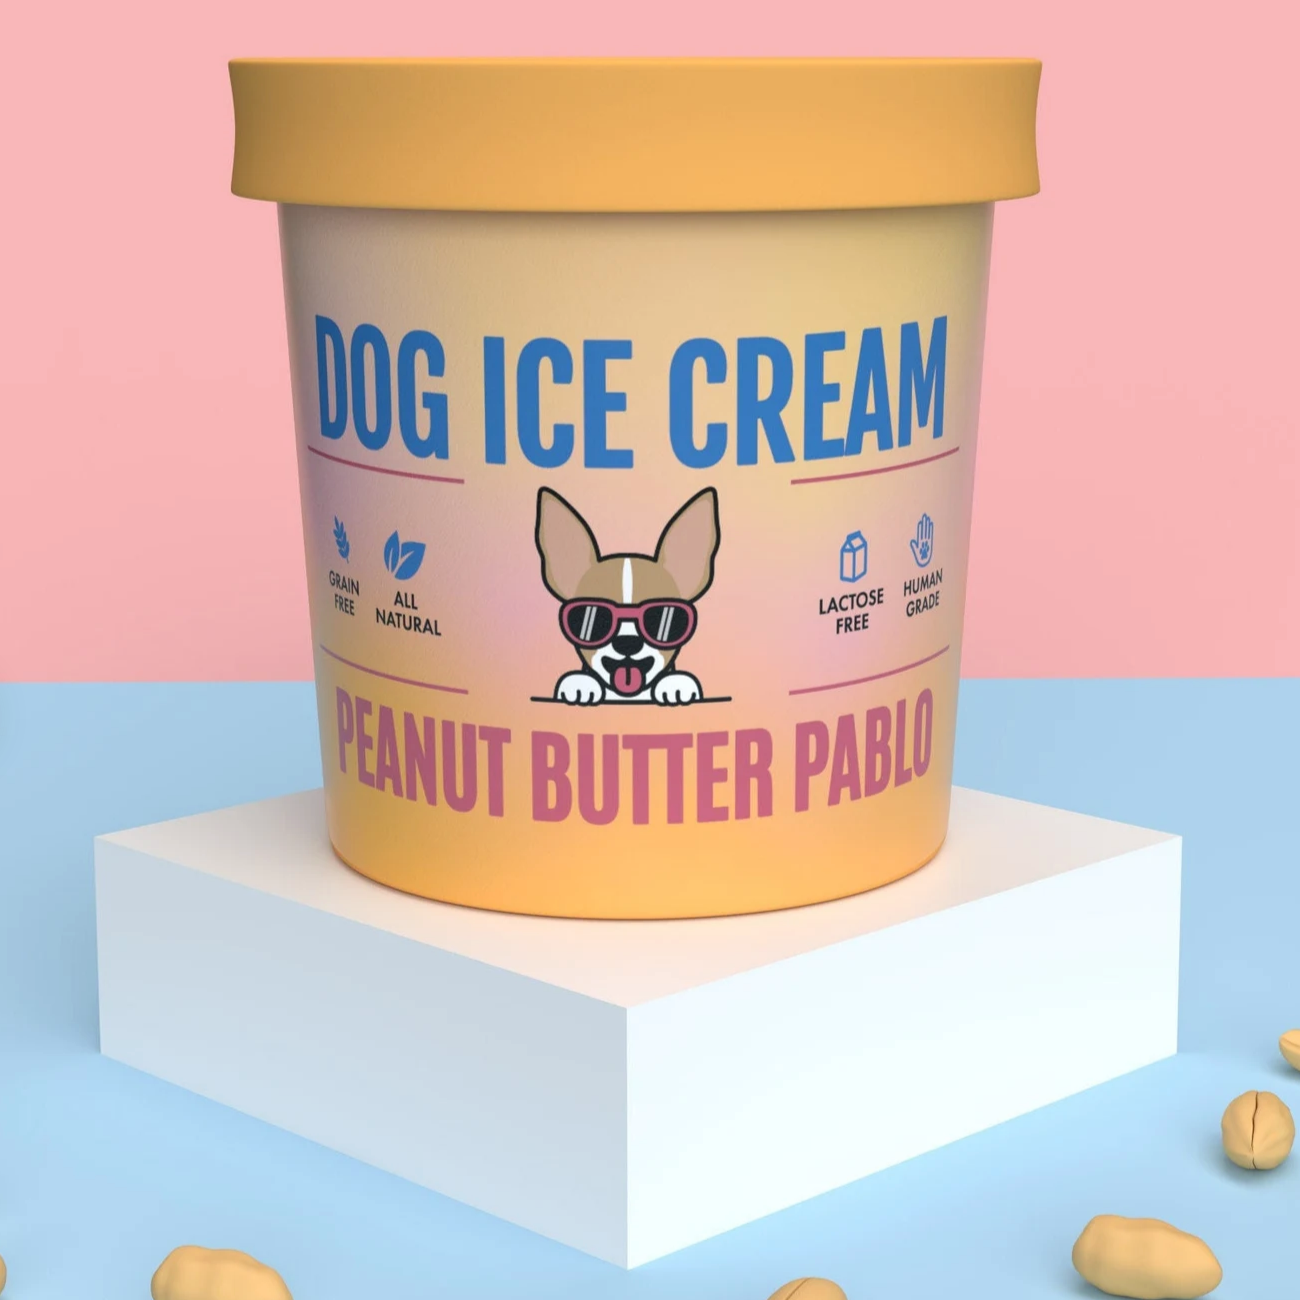 Ice Cream for Dogs